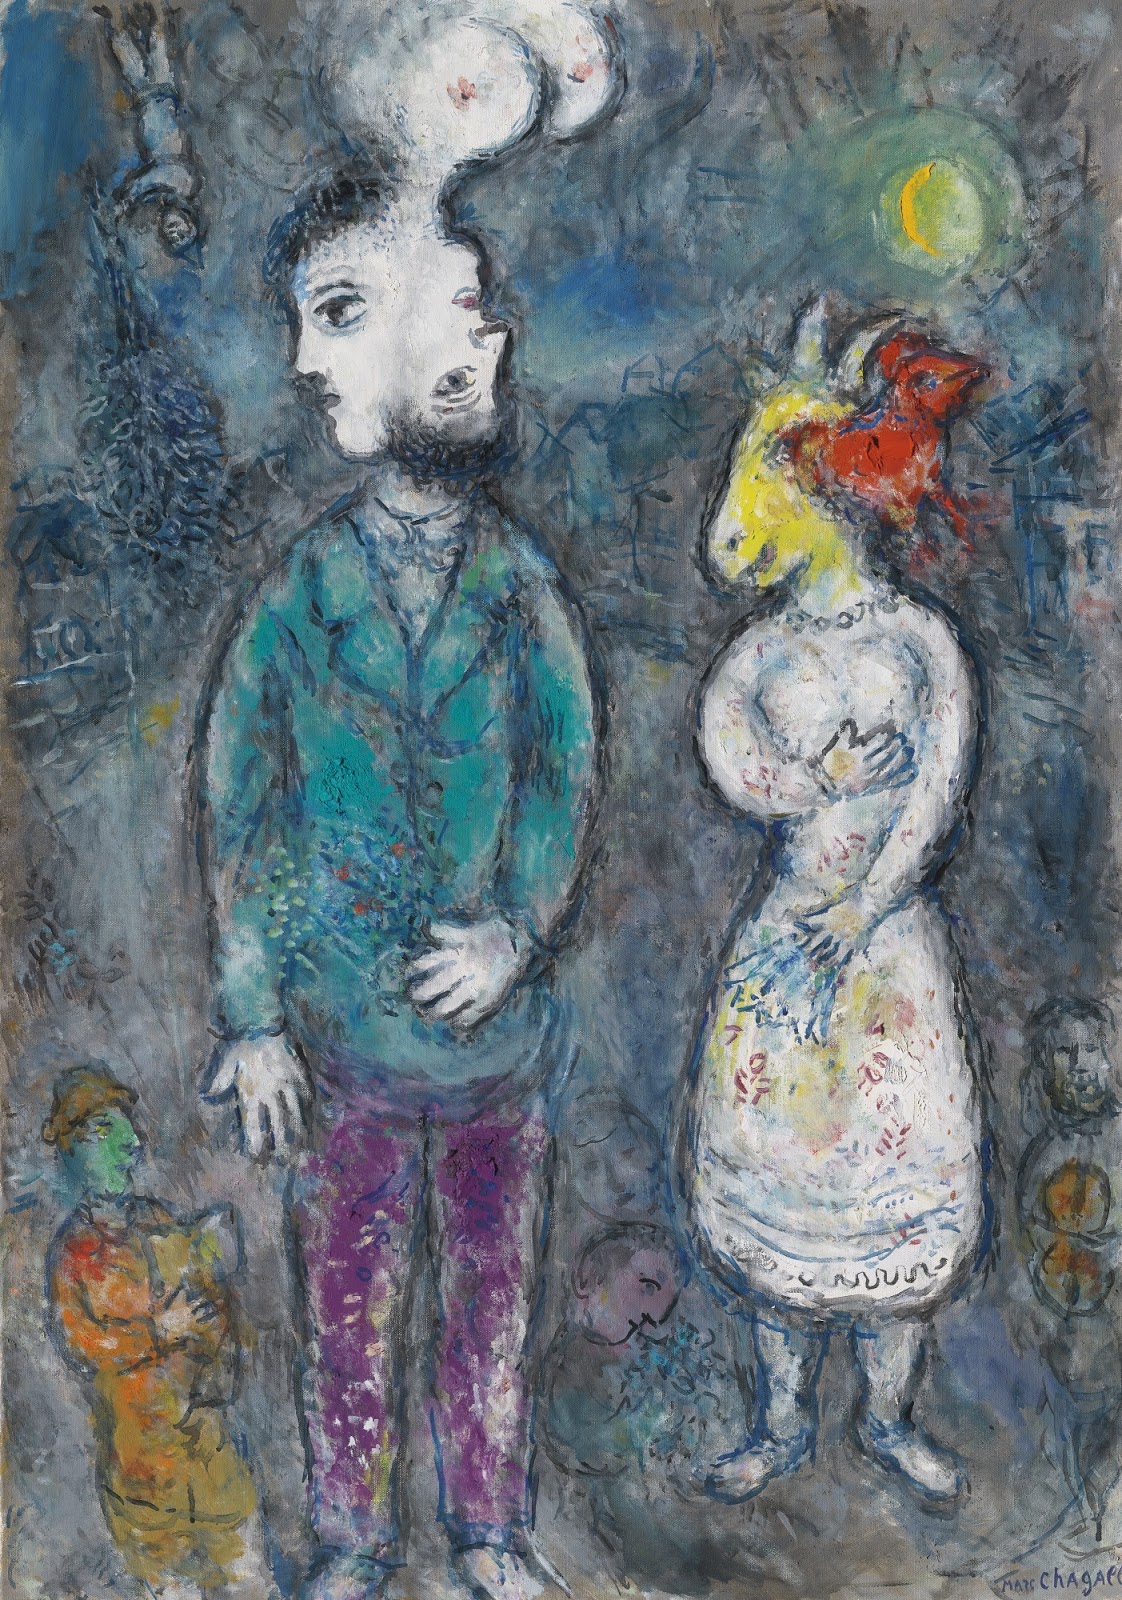 Marc+Chagall-1887-1985 (367).jpg